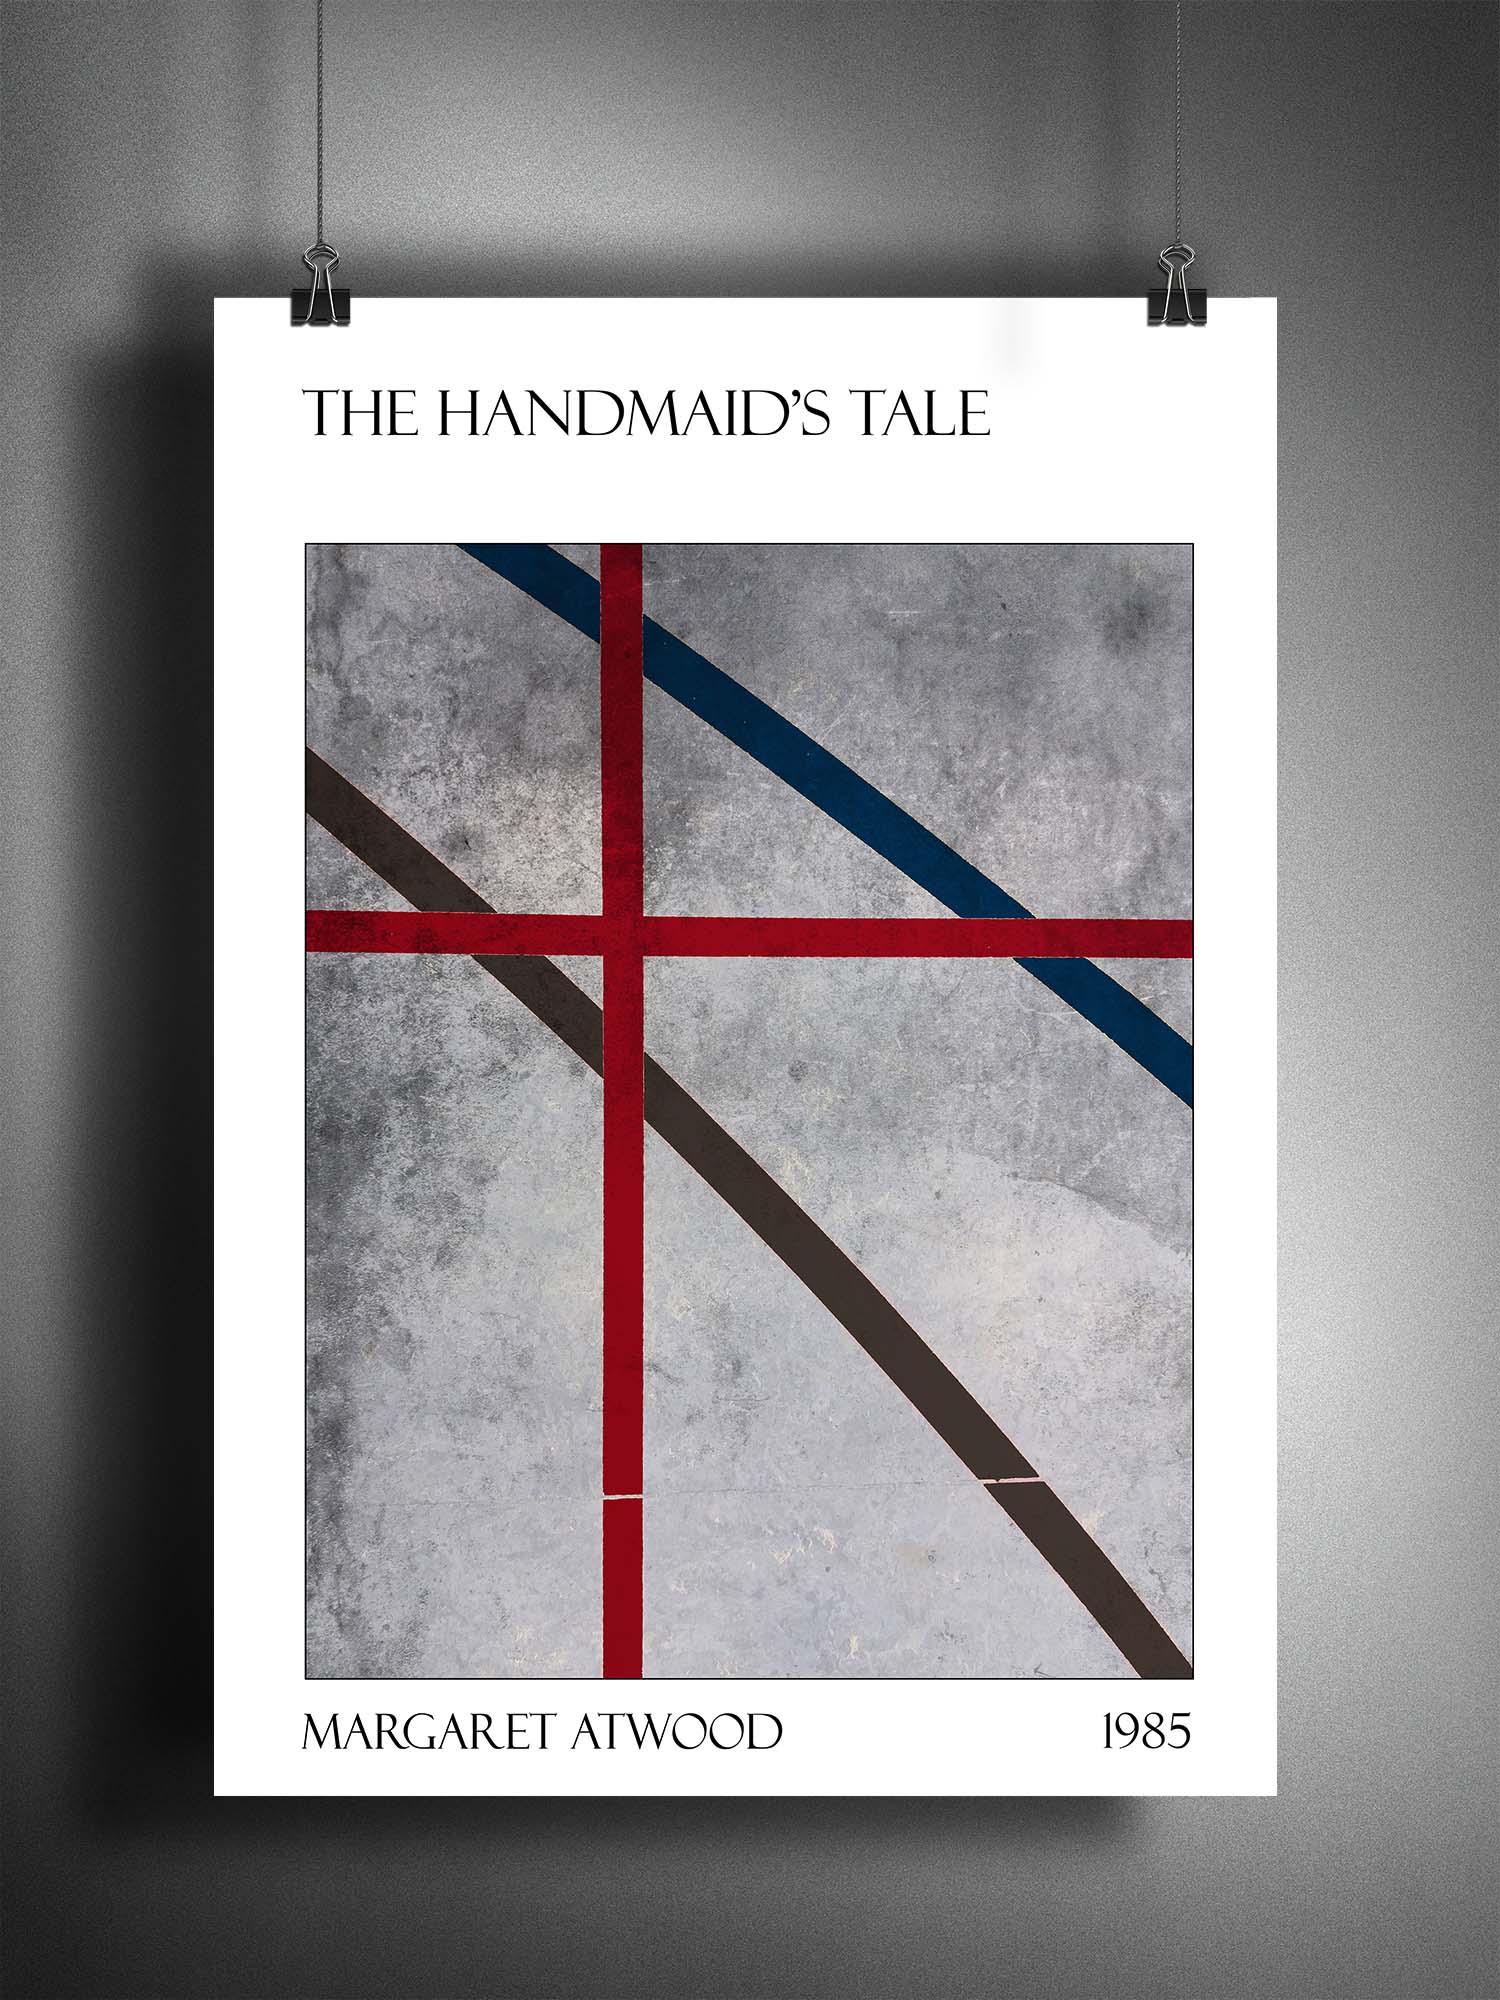 Handmaid's Tale "Court Lines I" - James Voce // artist